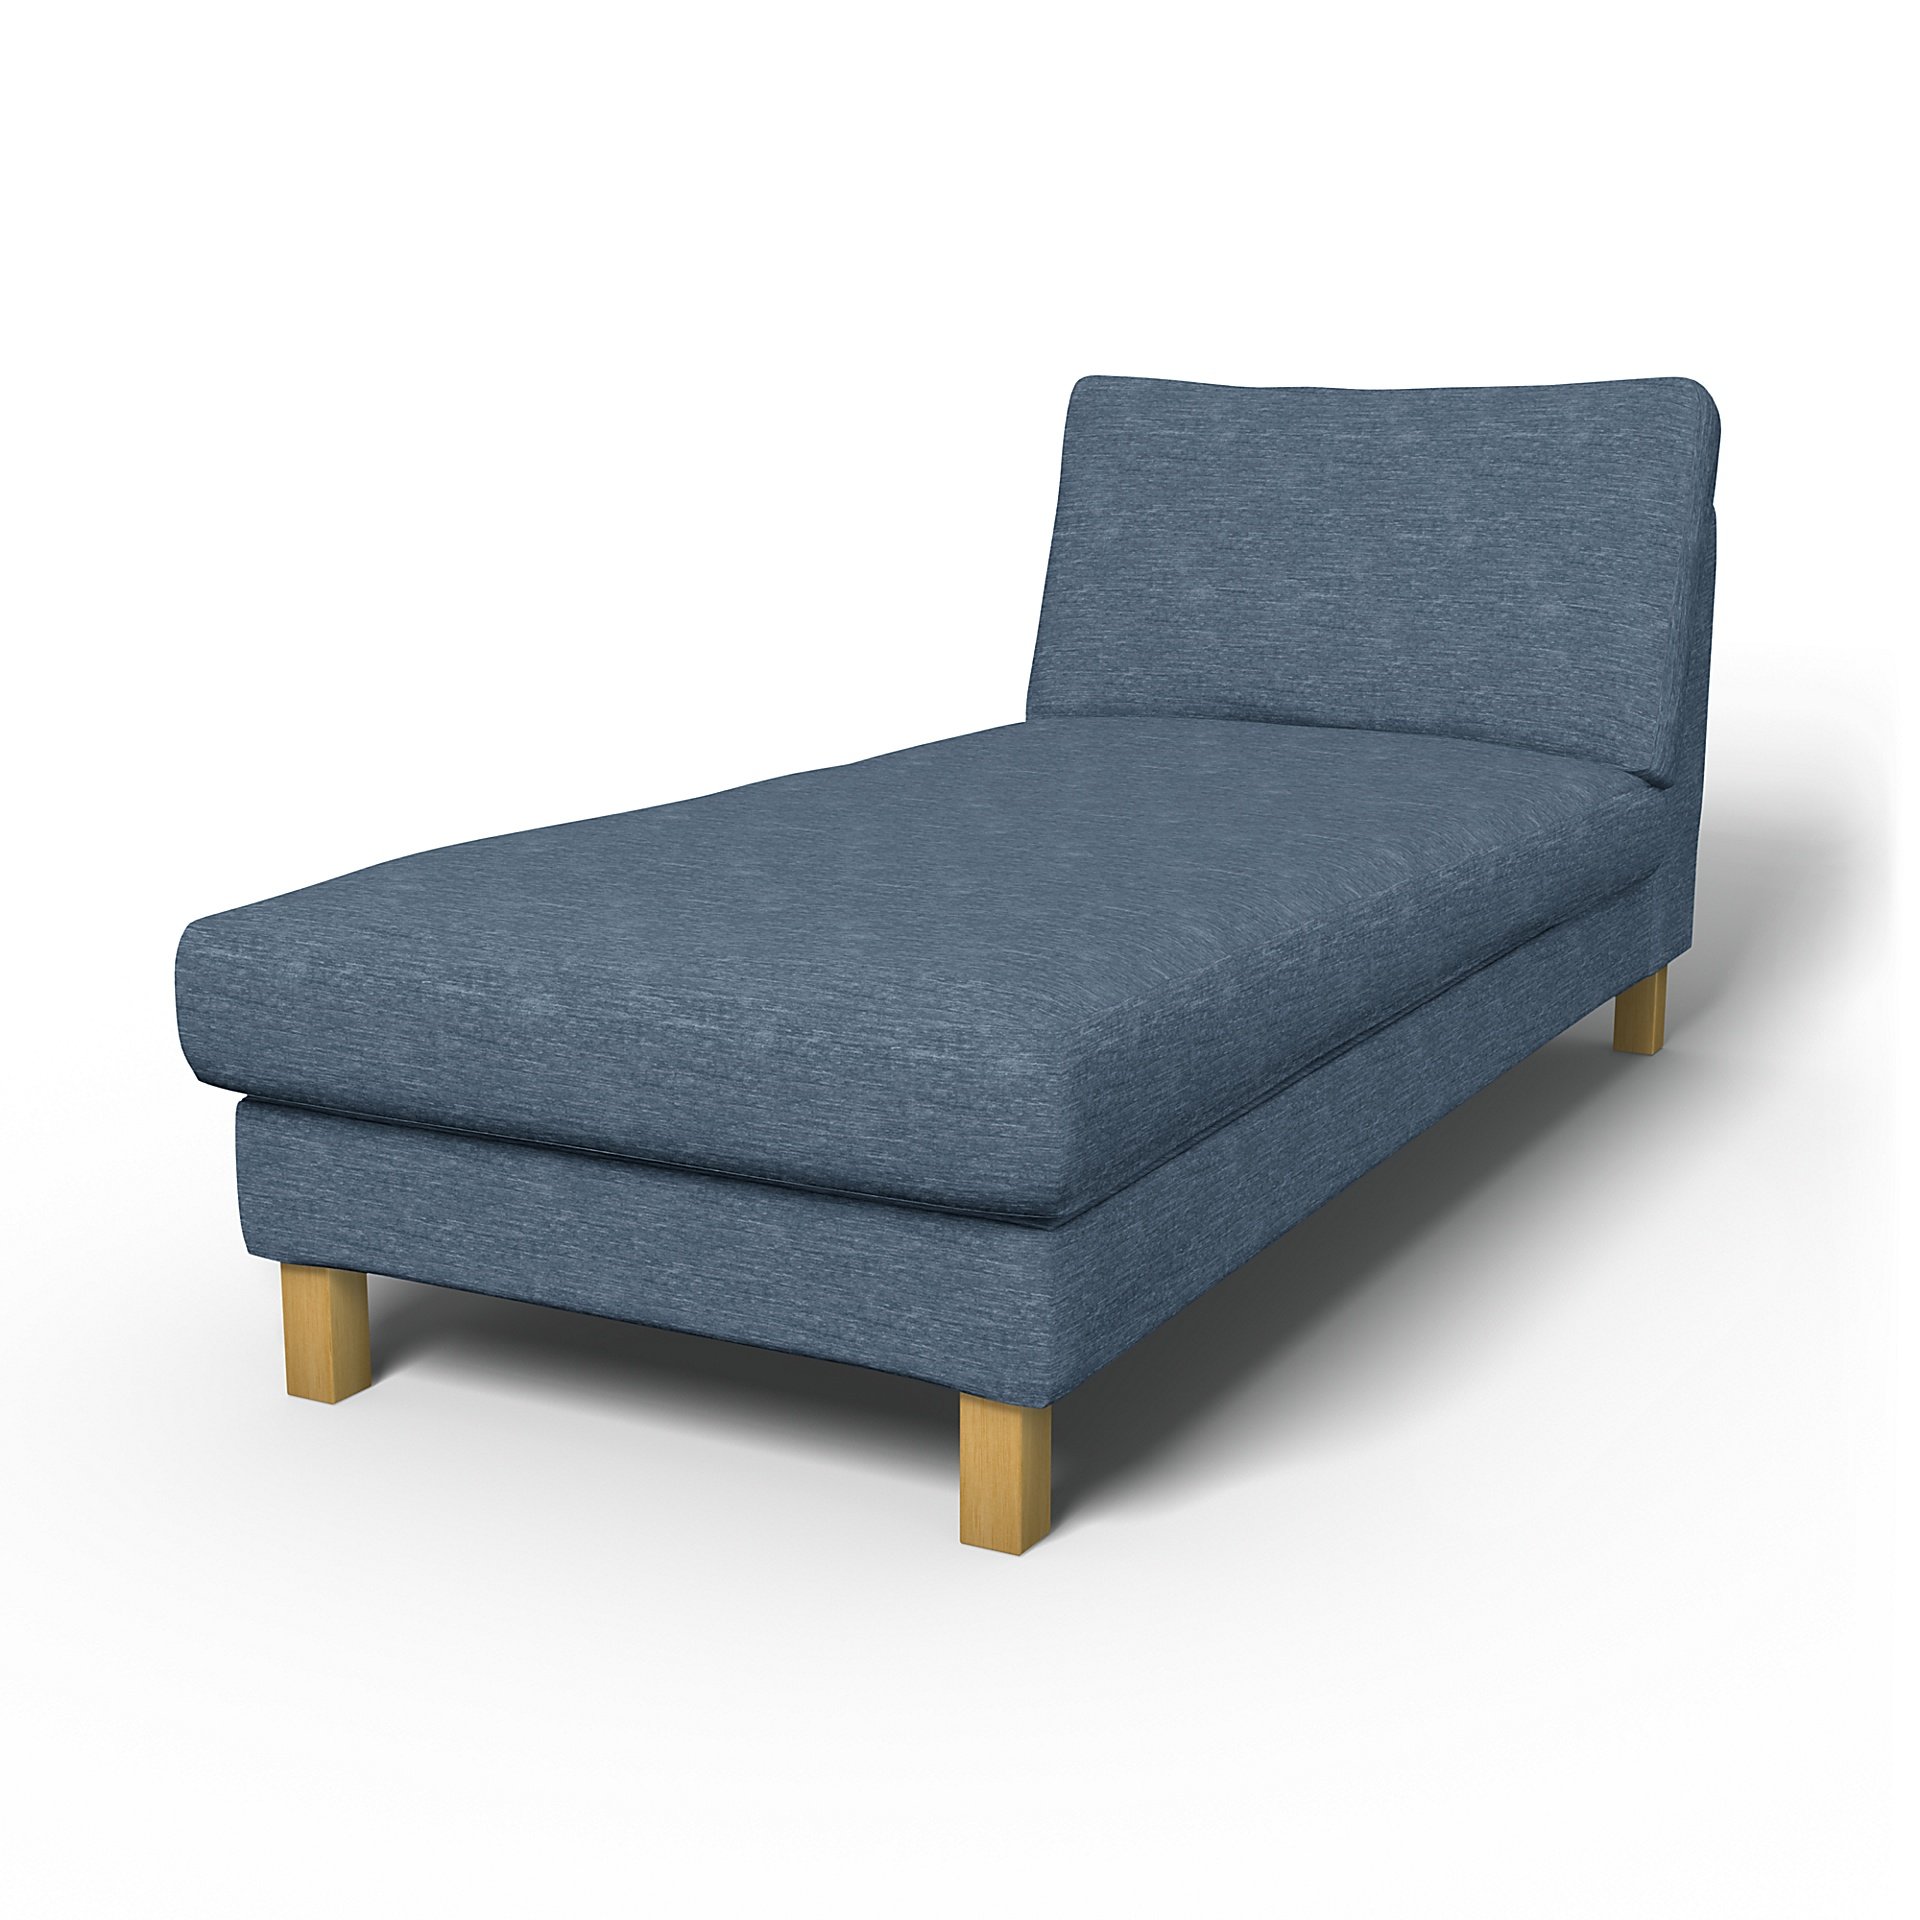 IKEA - Karlstad Stand Alone Chaise Longue Cover, Mineral Blue, Velvet - Bemz